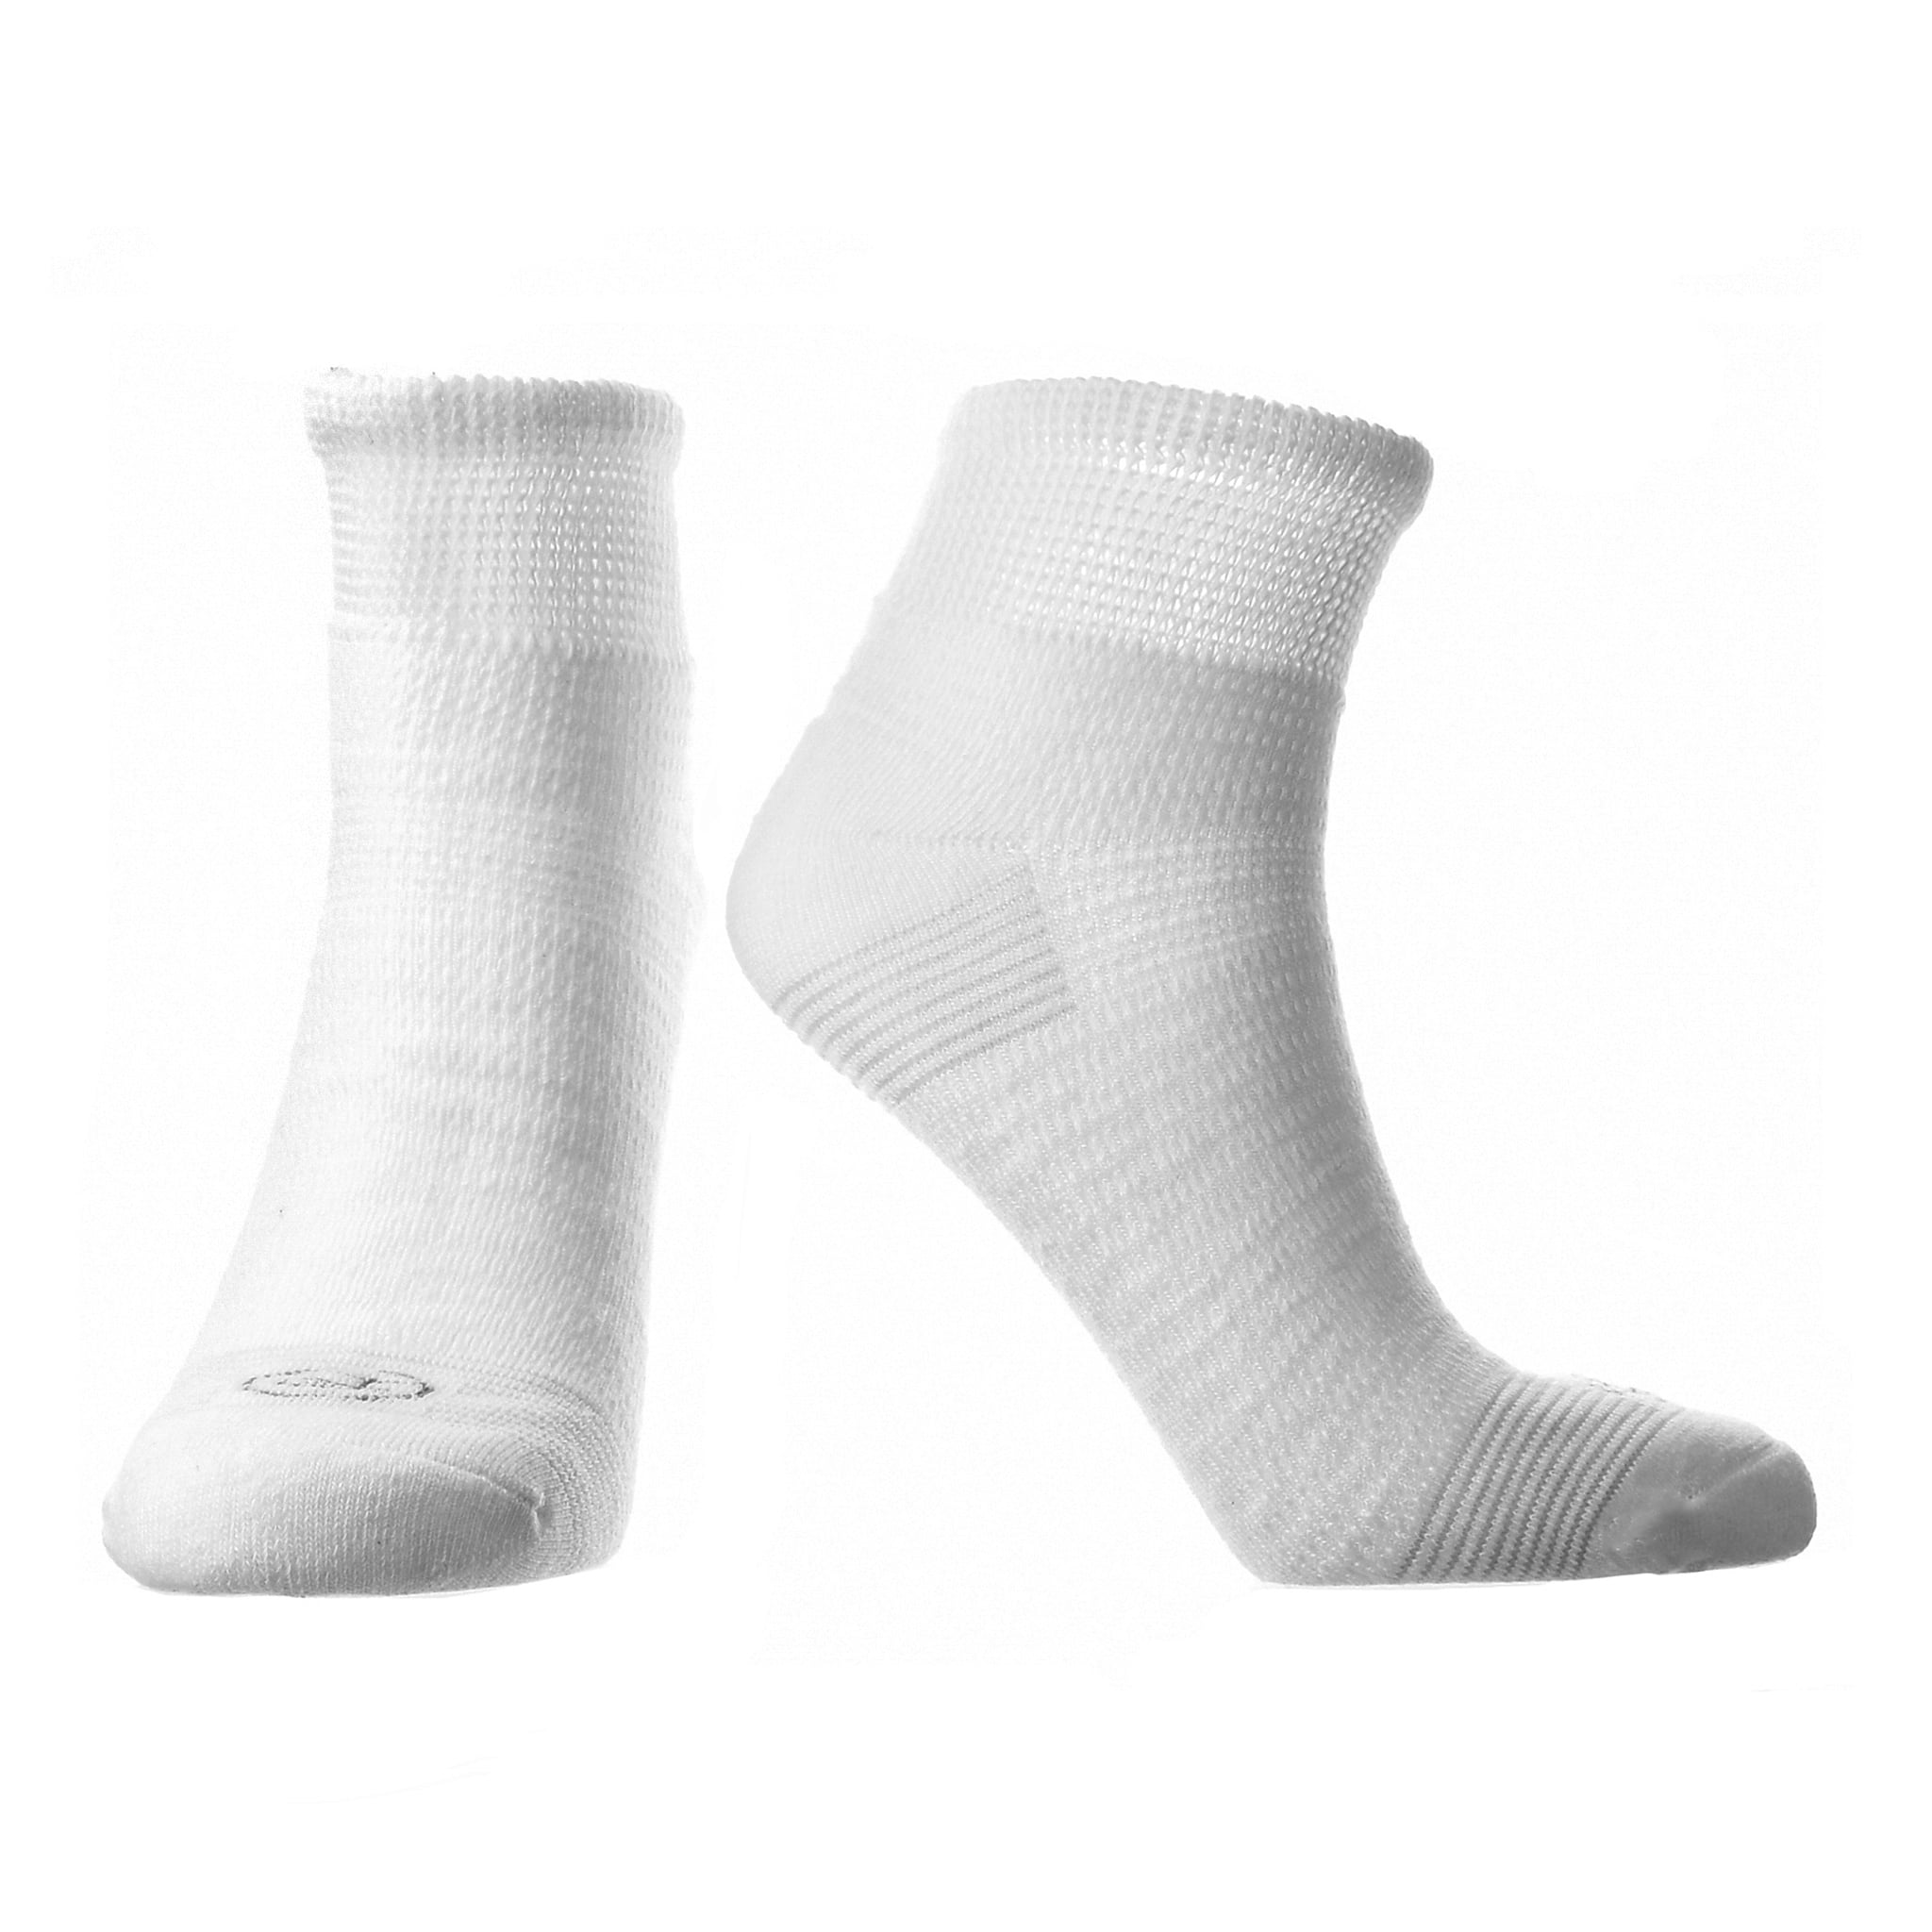 Doctor's Choice Women's Diabetic Socks, Neuropathy Socks, Non-Binding ...